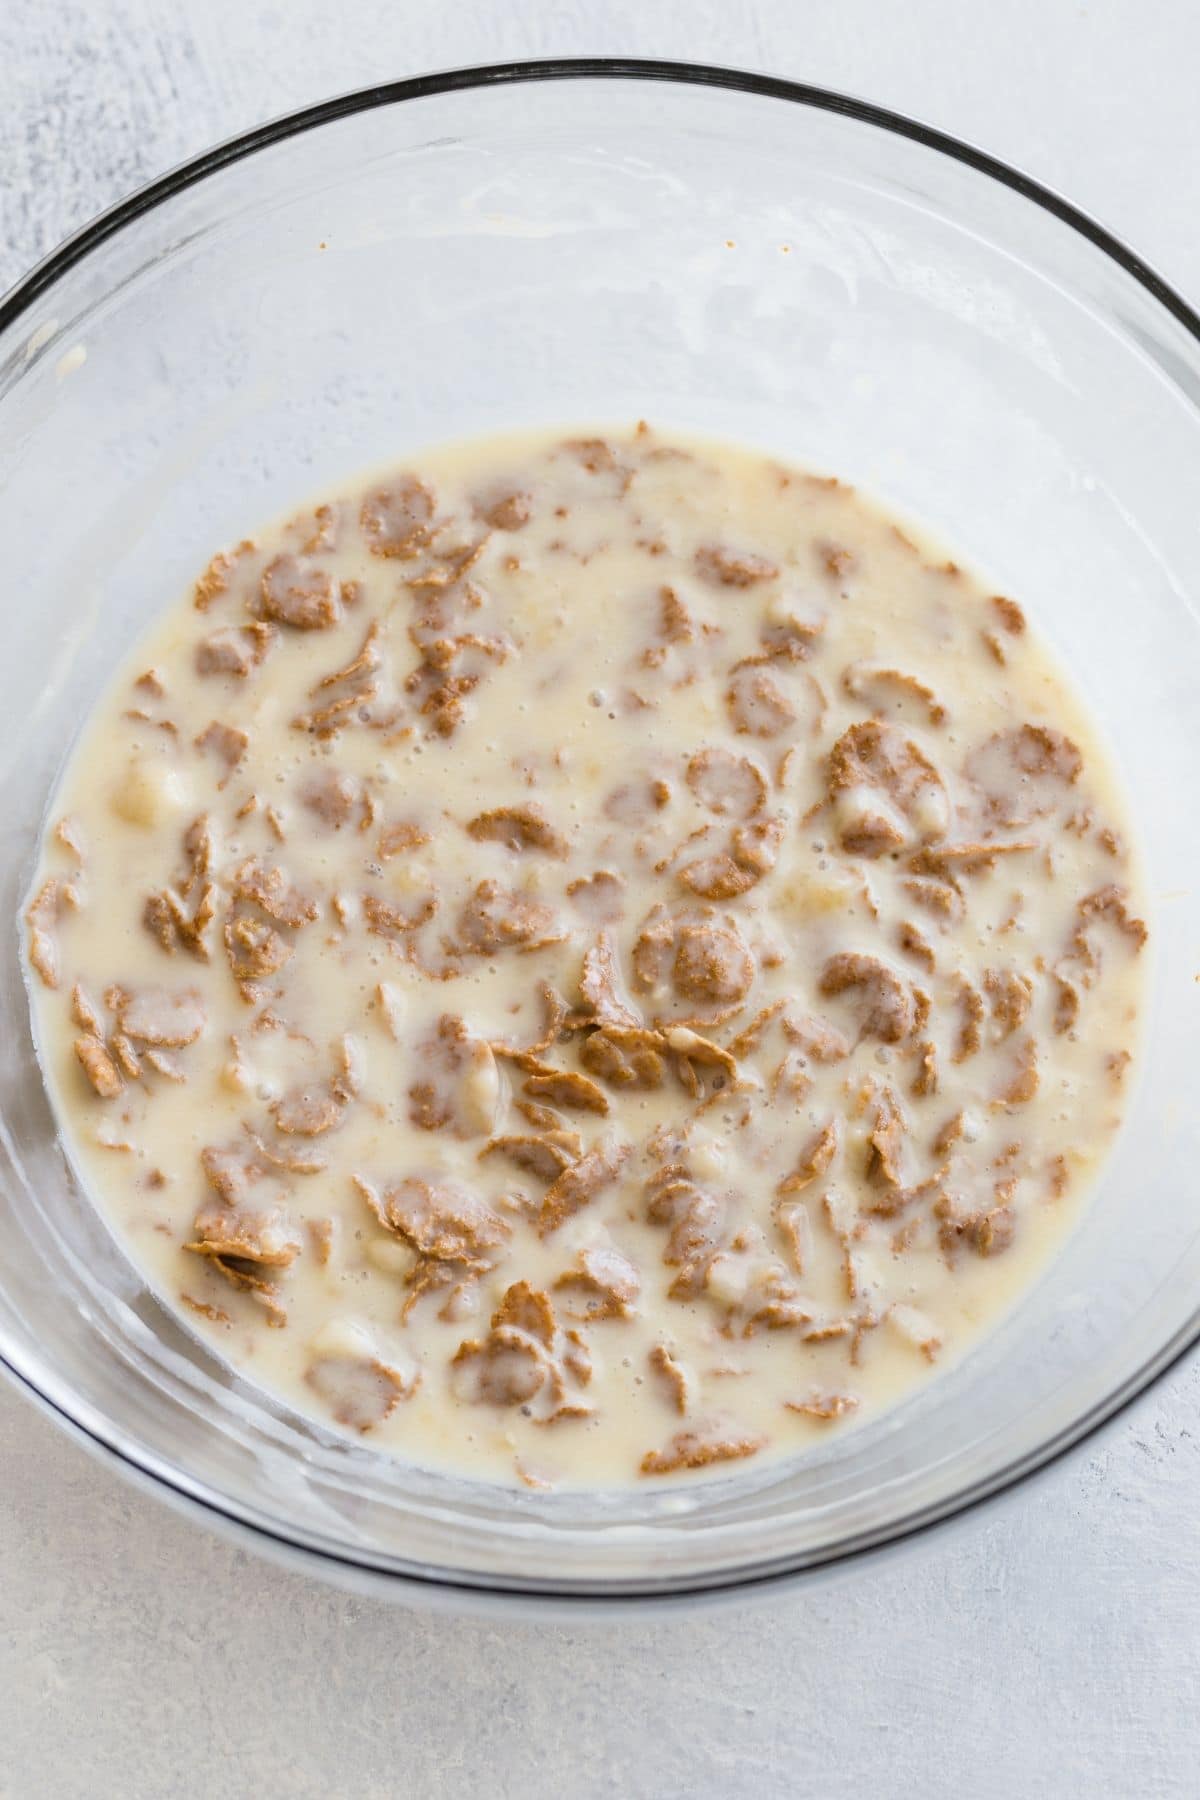 bran cereal soaking in milk mixture for muffins